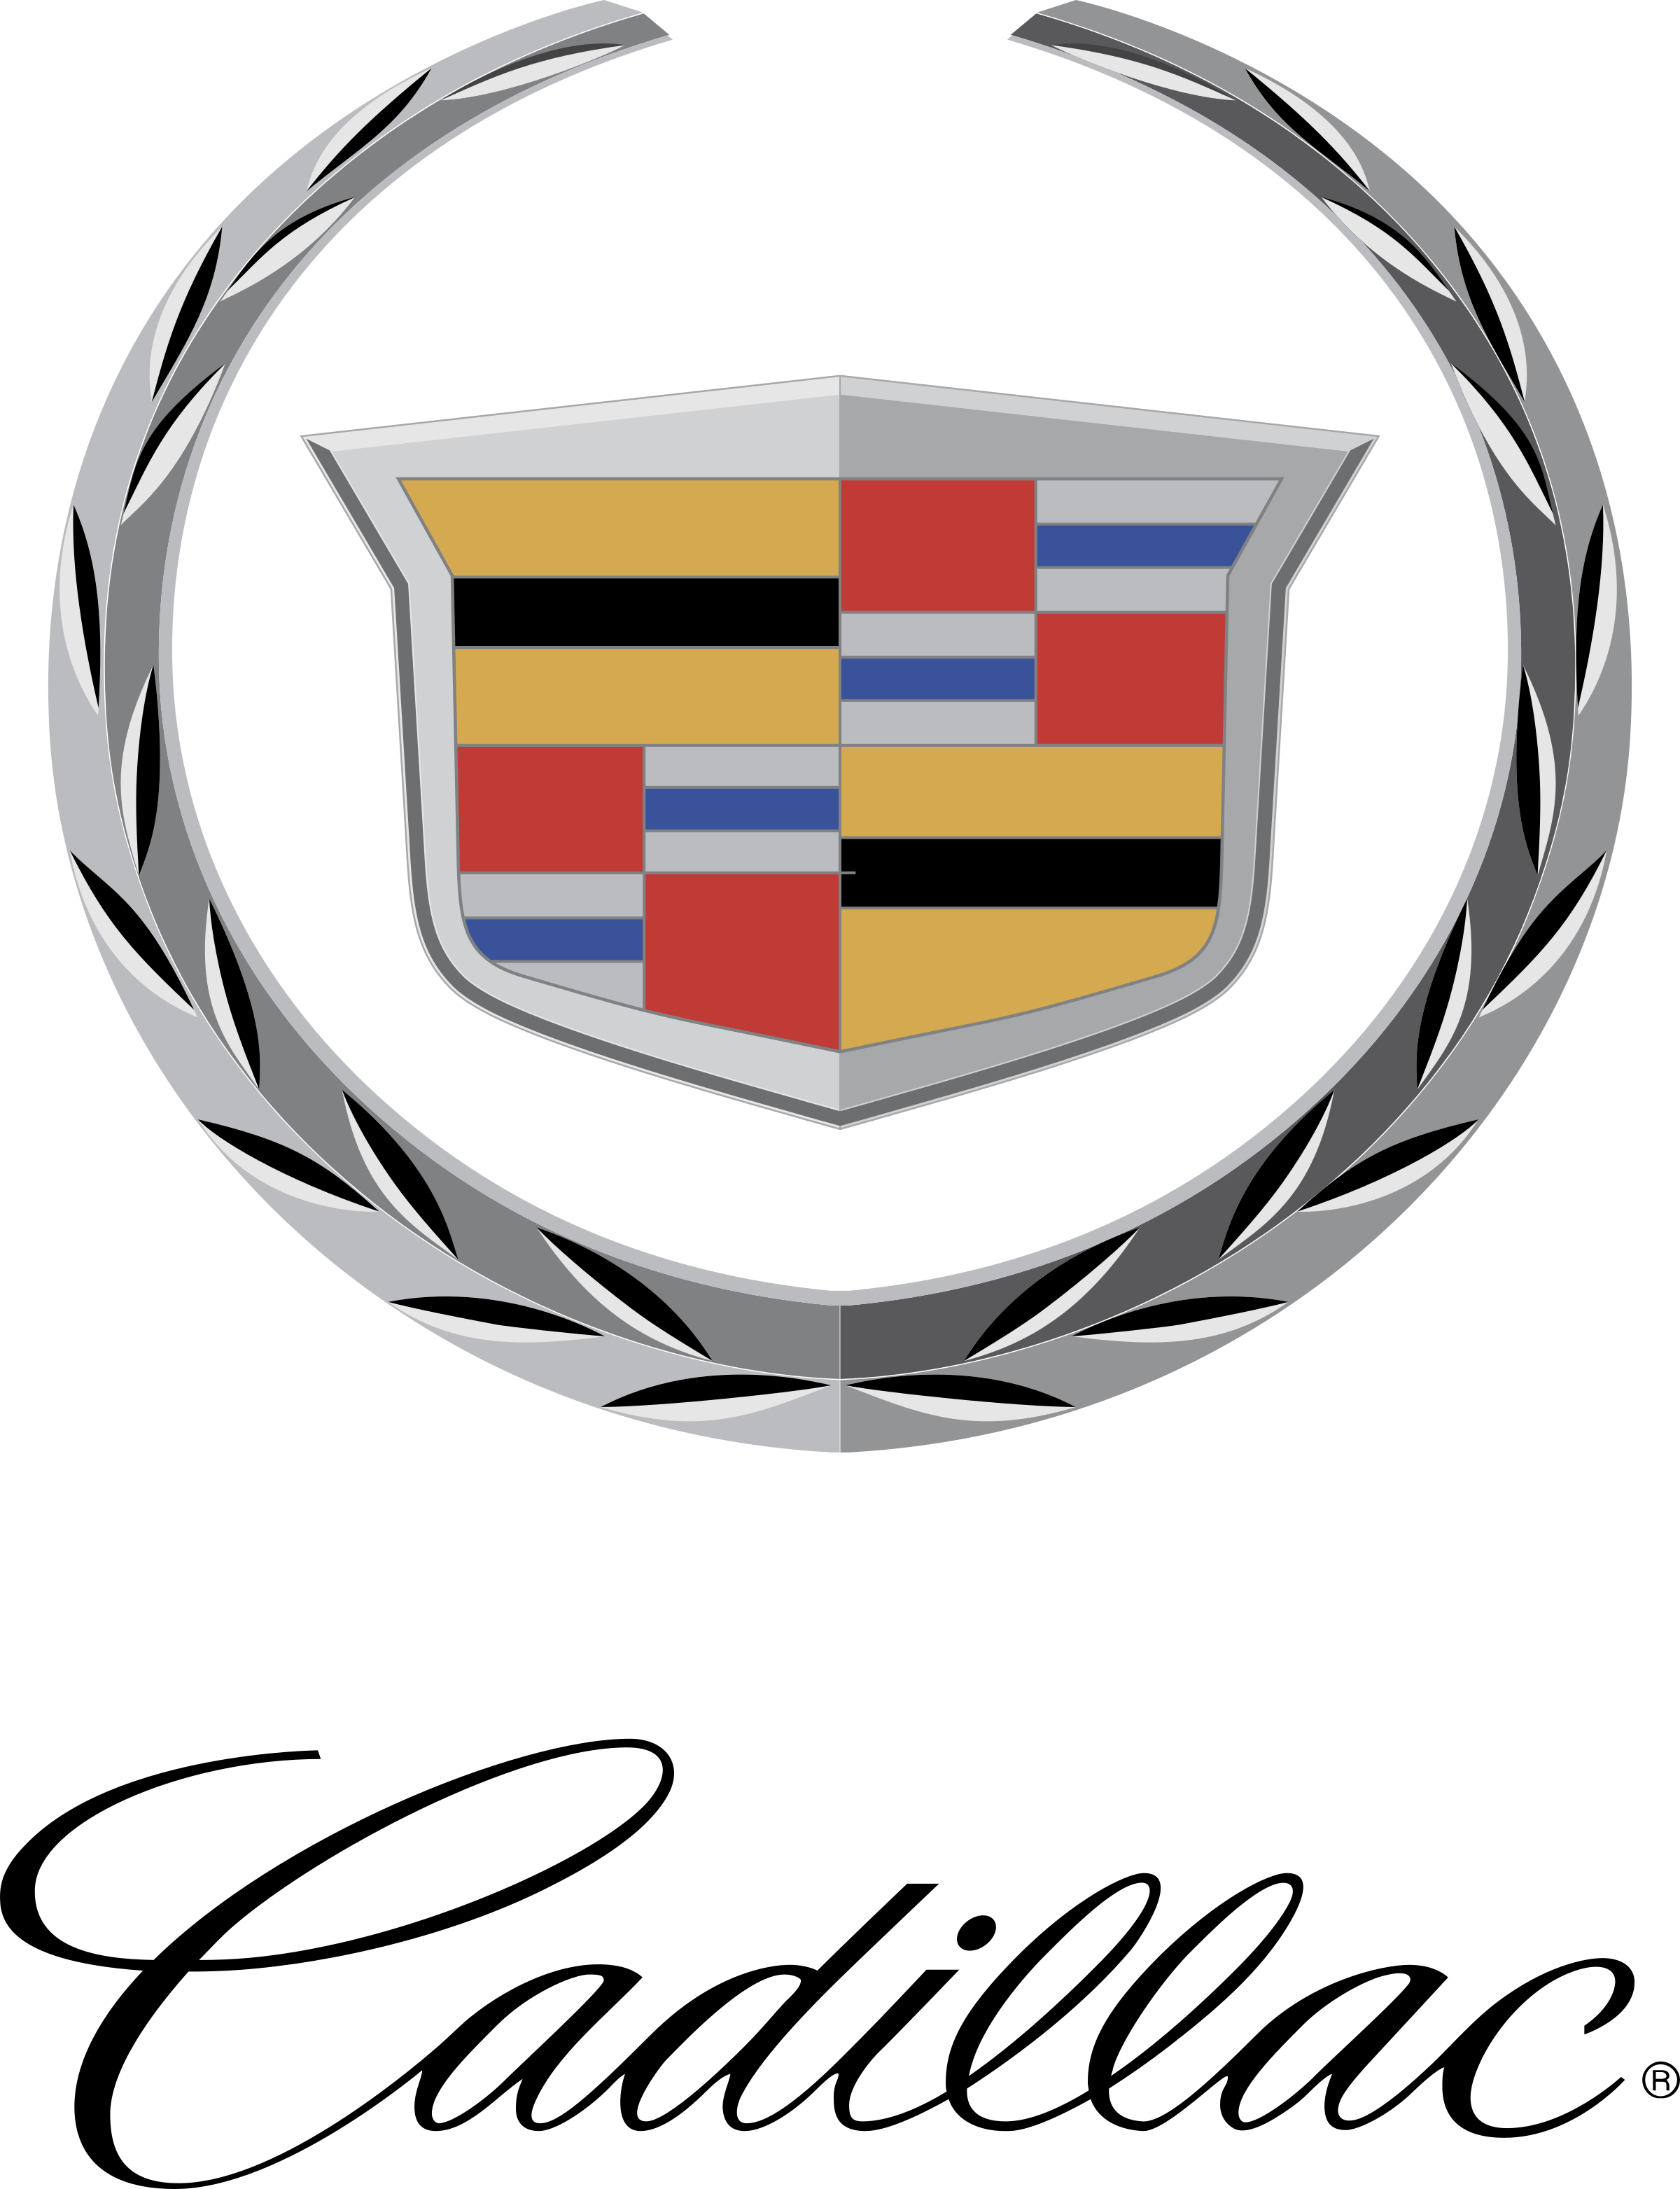 Download PNG image - Cadillac Logo PNG Image 